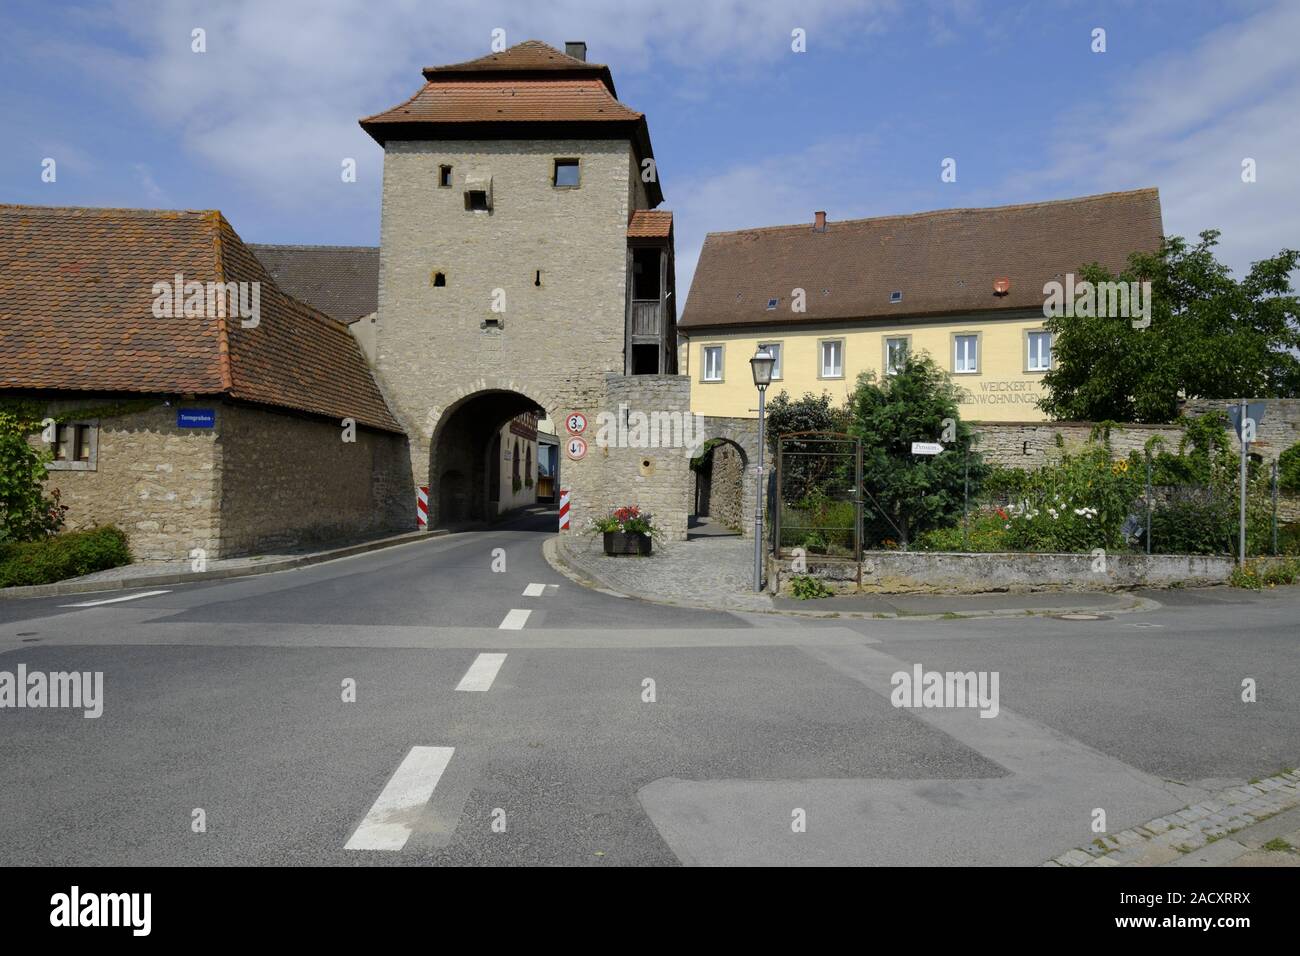 Sommerach am Main, distretto di Kitzingen, bassa Franconia, Baviera, Germania Foto Stock